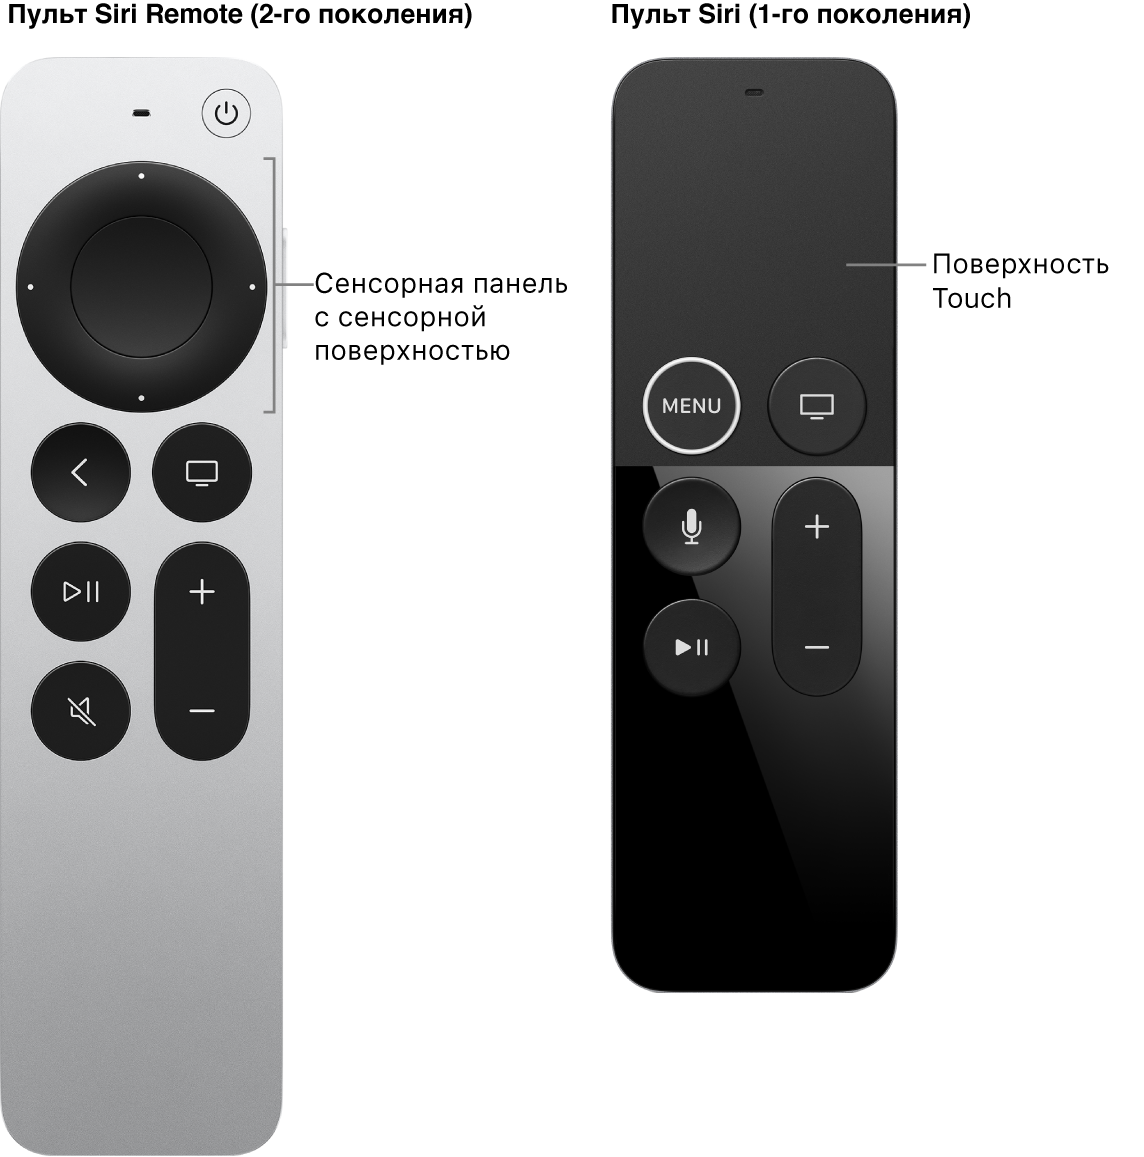 Siri Remote (2-го поколения) с сенсорной панелью и Siri Remote (1-го поколения) с сенсорной поверхностью